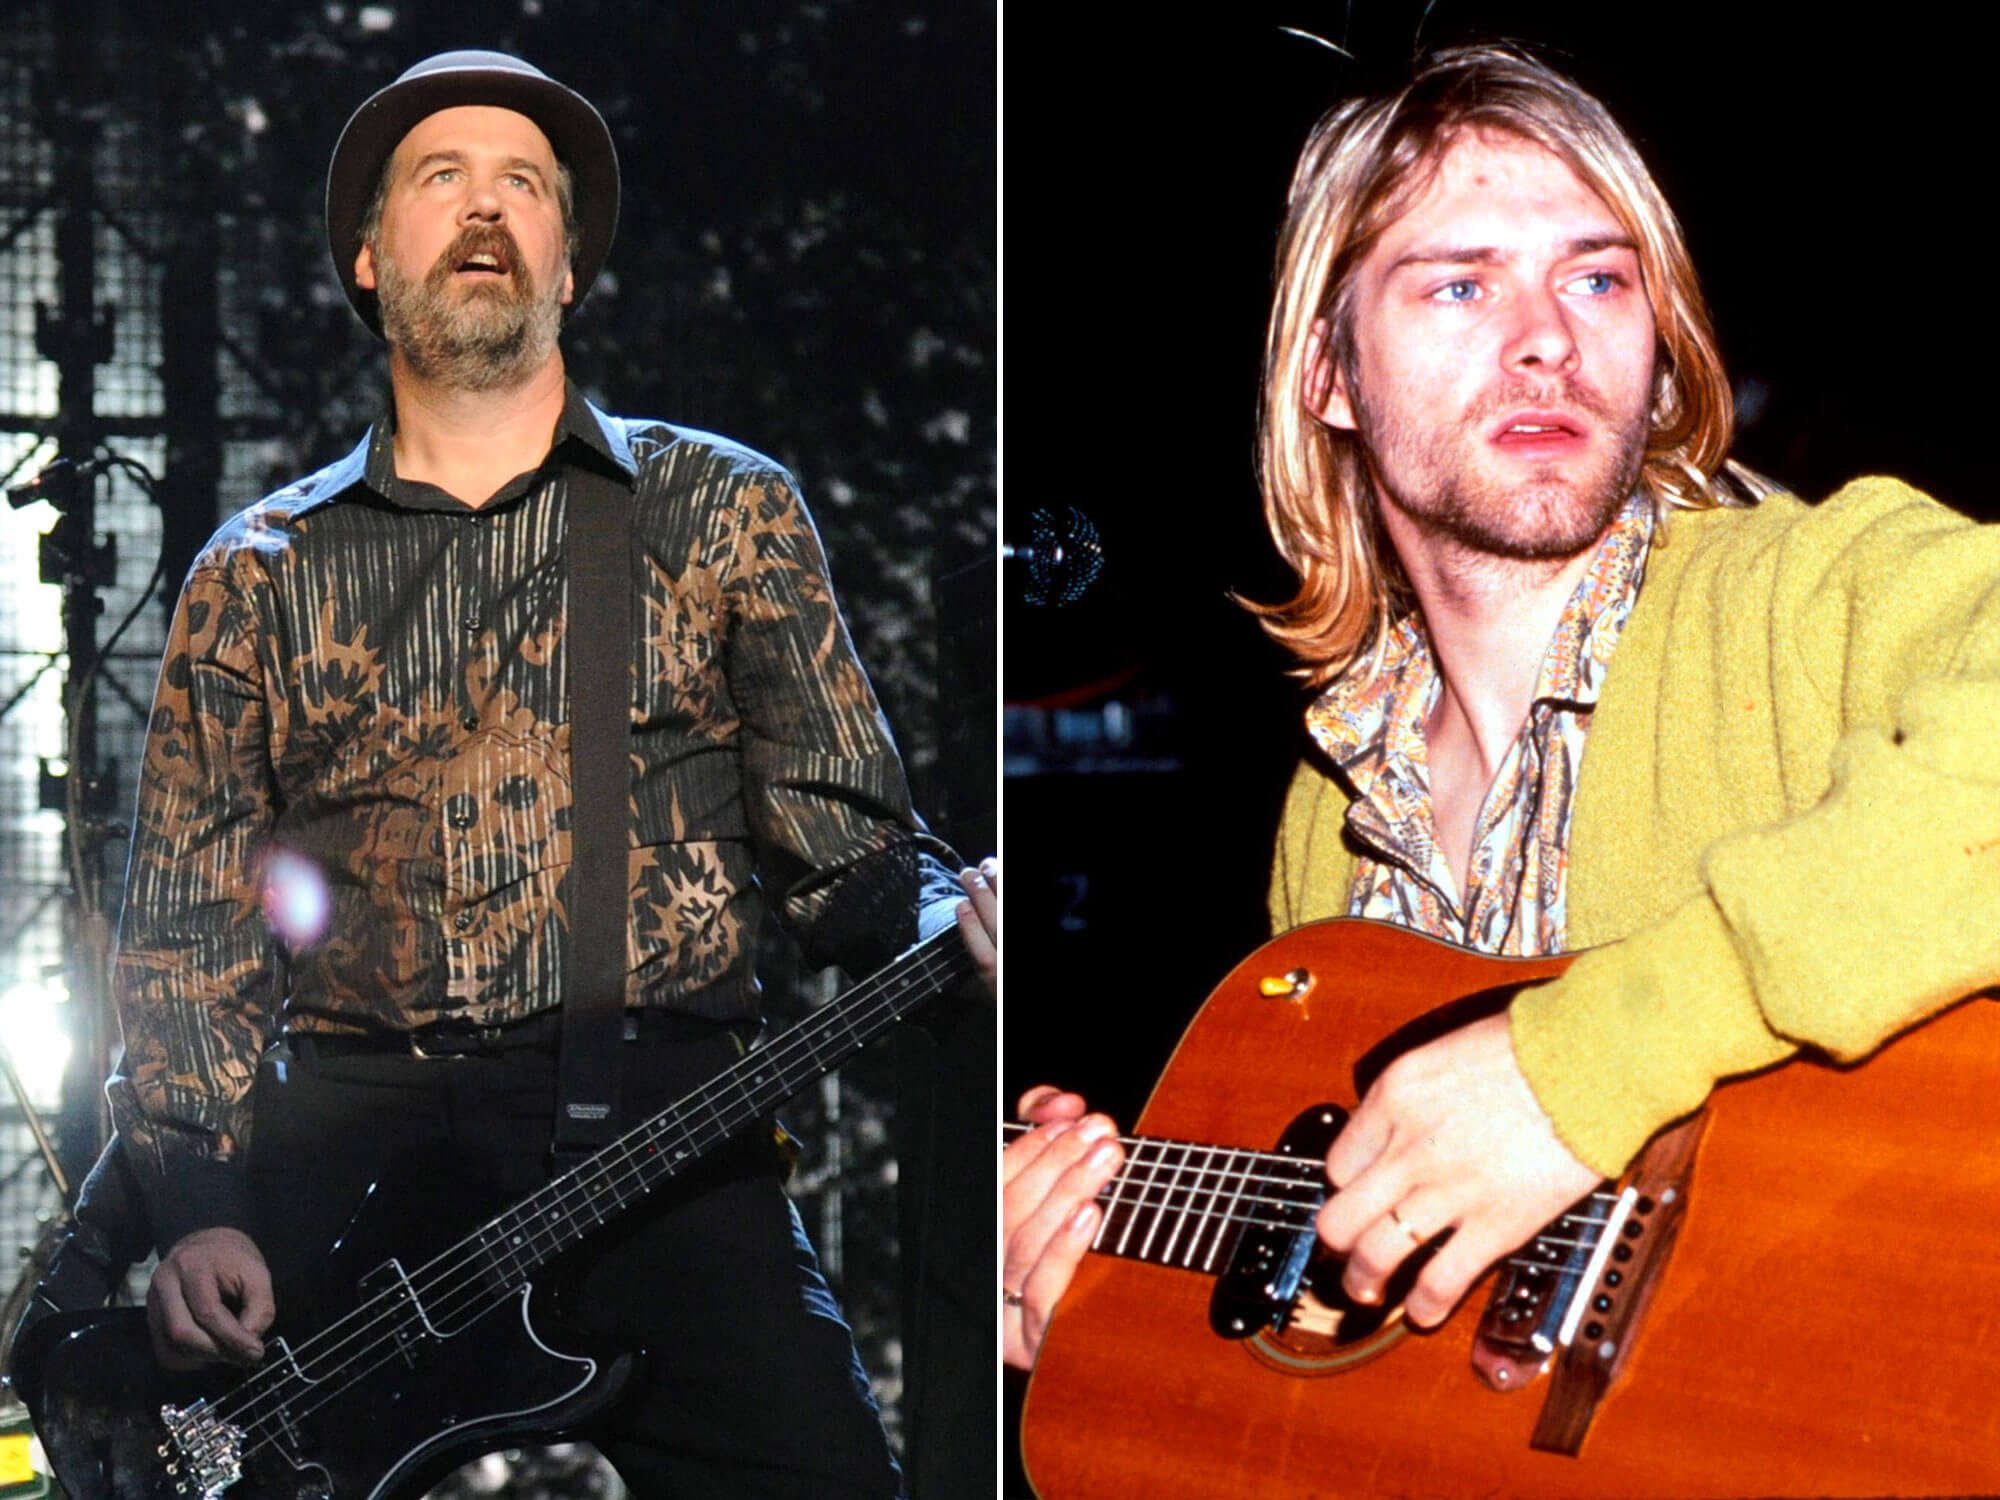 [L-R] Krist Novoselic and Kurt Cobain